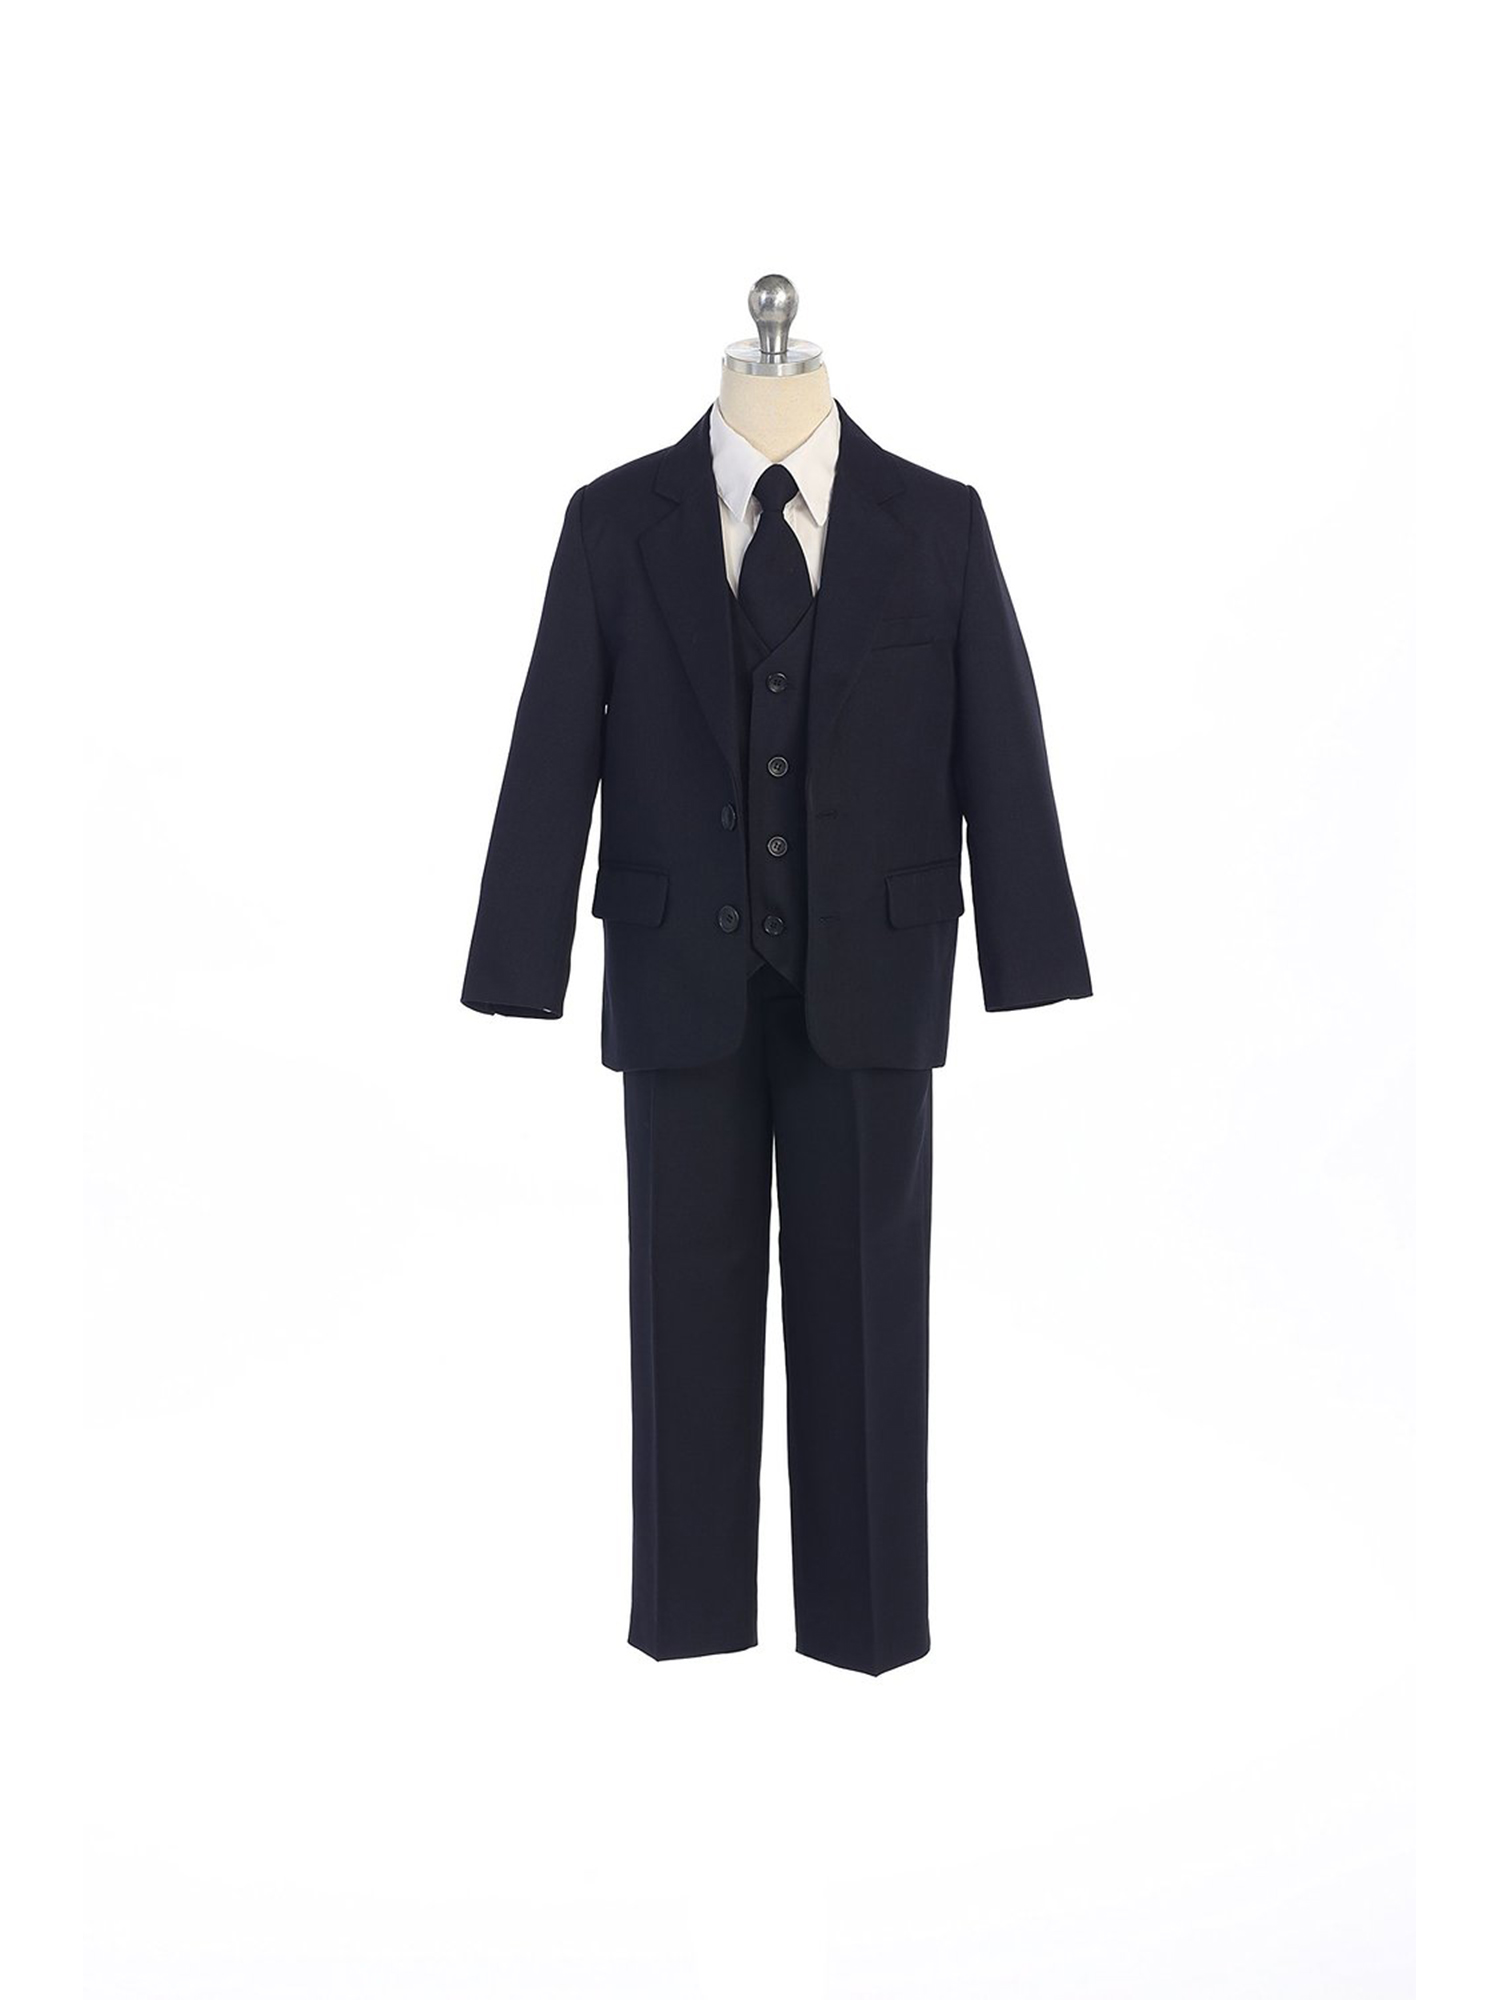 COLE Boys Suit with Shirt and Vest (5-Piece) - (8 Husky, Navy Blue)